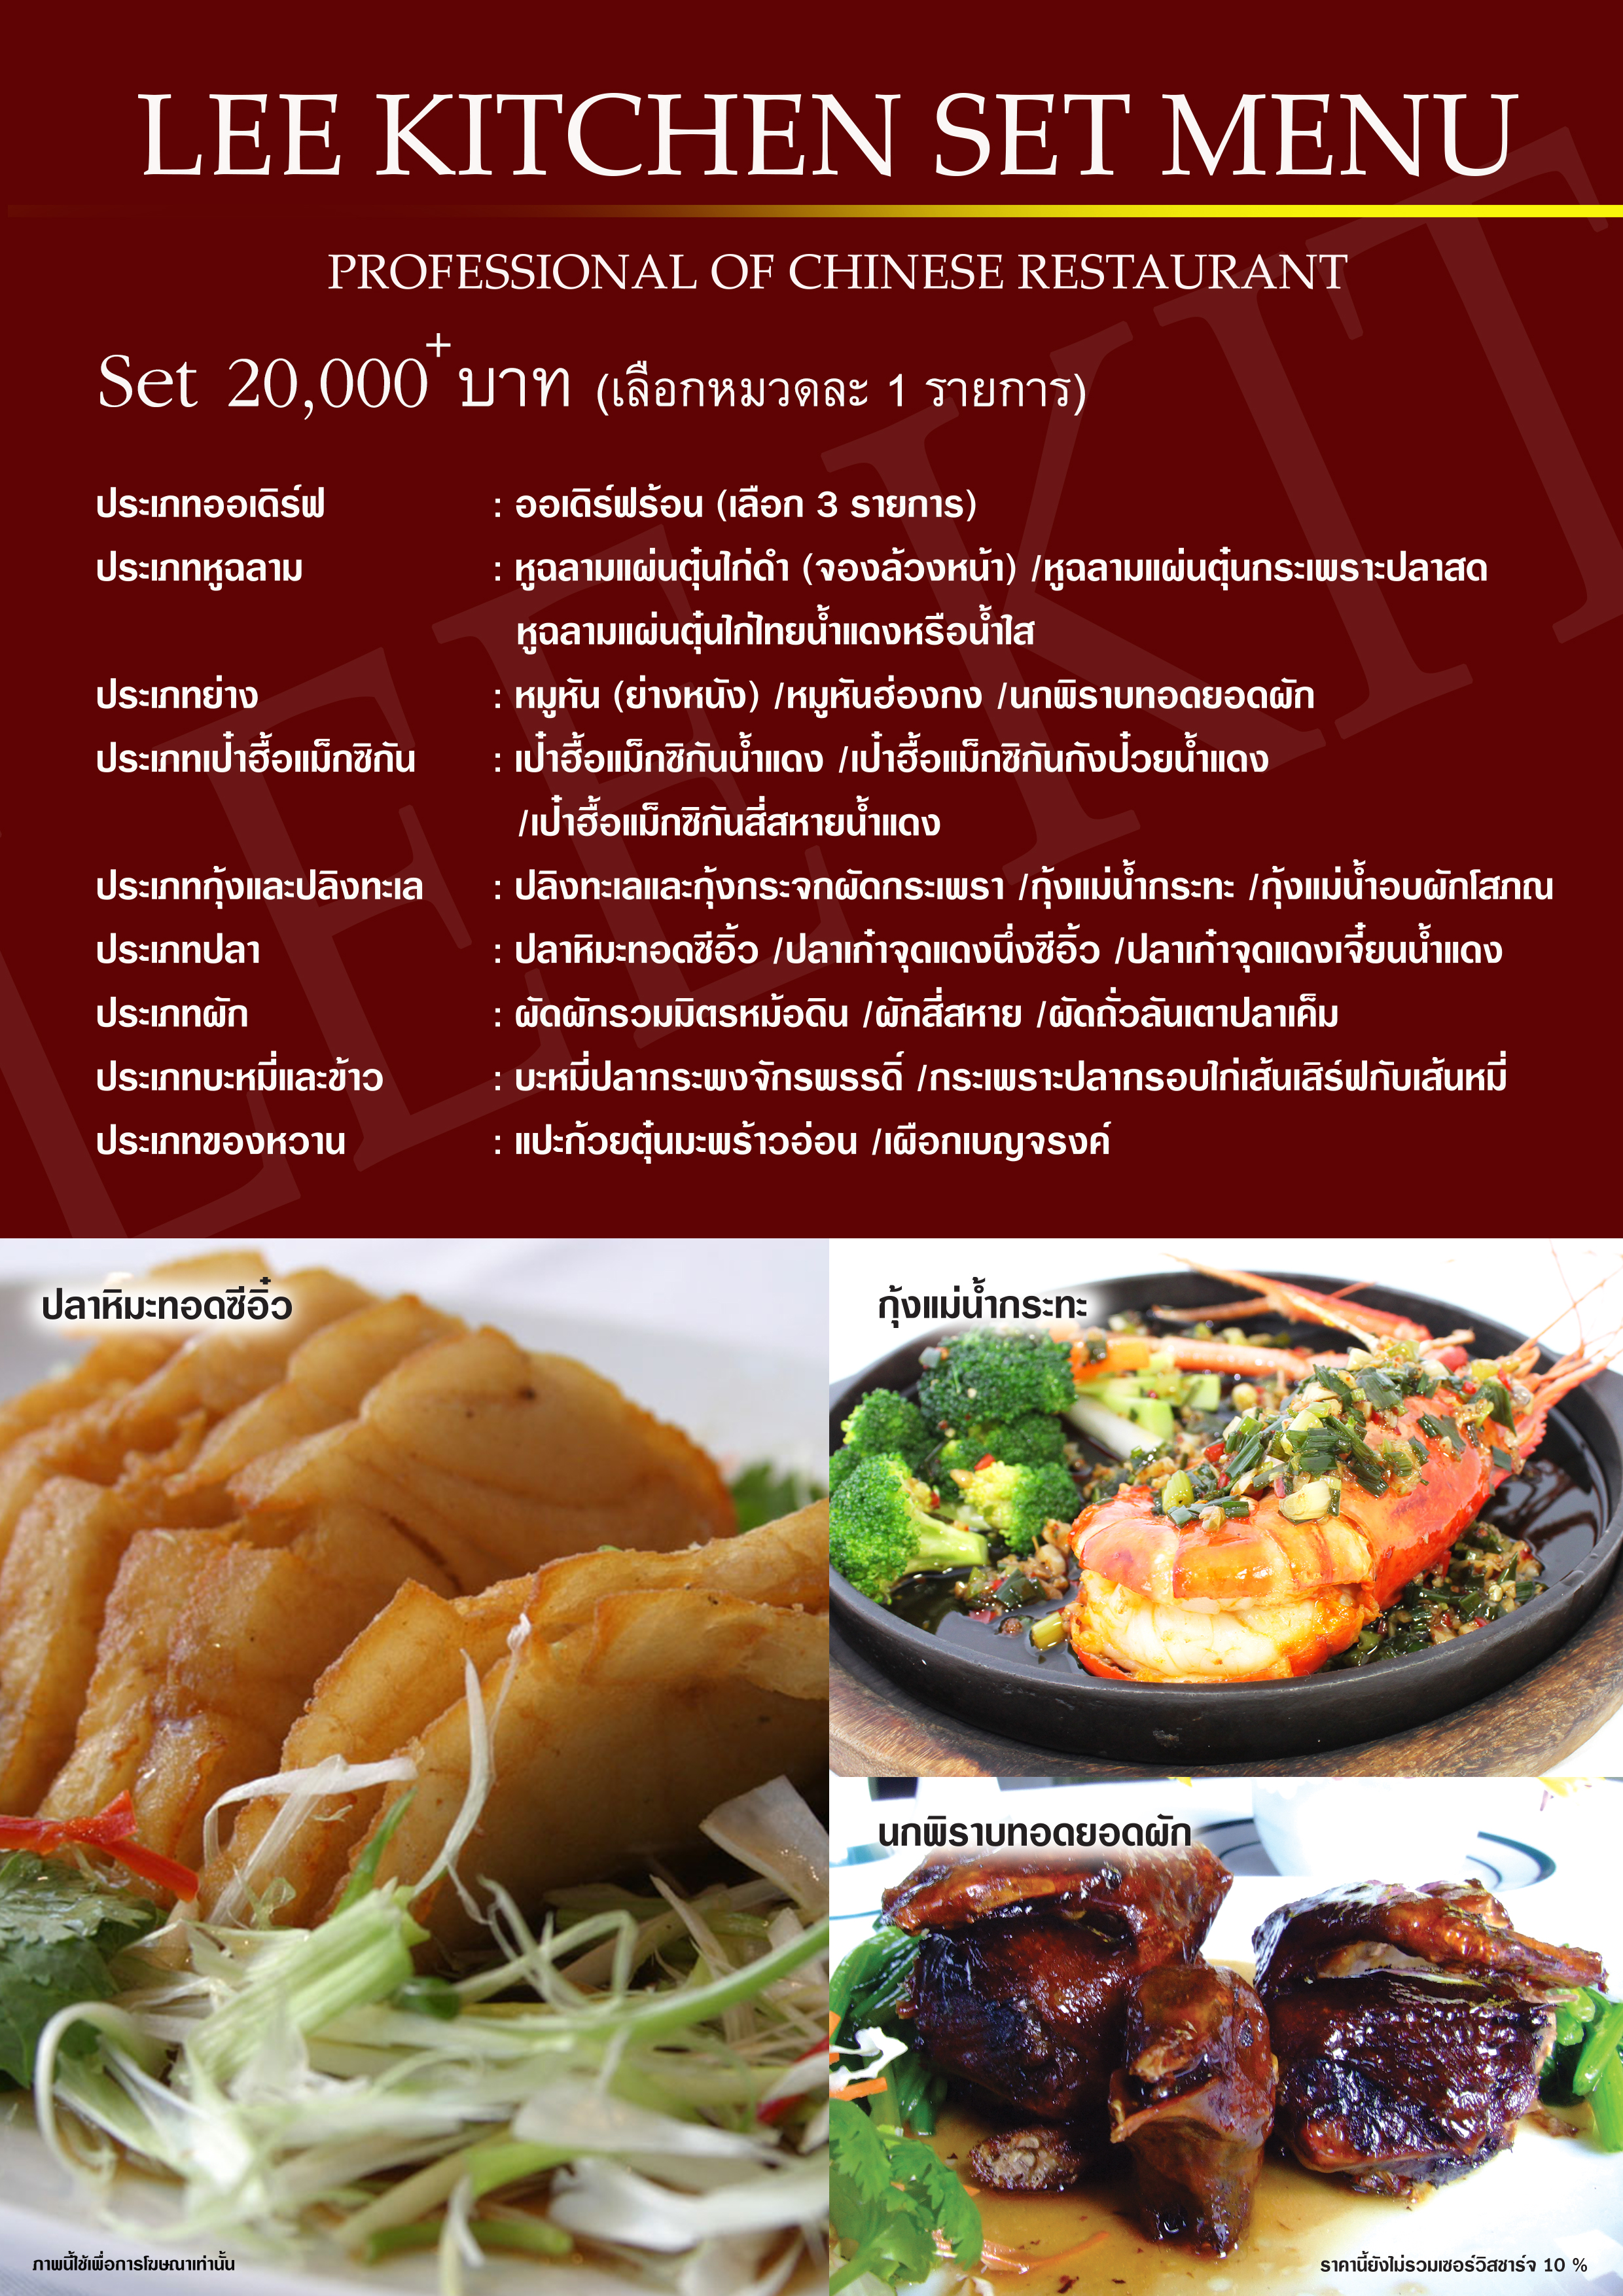 LEE KITCHEN, The Finest Cantonese Cuisine in Bangkok since 1989 :: ลี  คิทเช่น อร่อยจนตะเกียบสุดท้าย :: อาหารจีน อาหารฟิวชั่น จัดเลี้ยง หูฉลาม  ภัตตาคารจีน